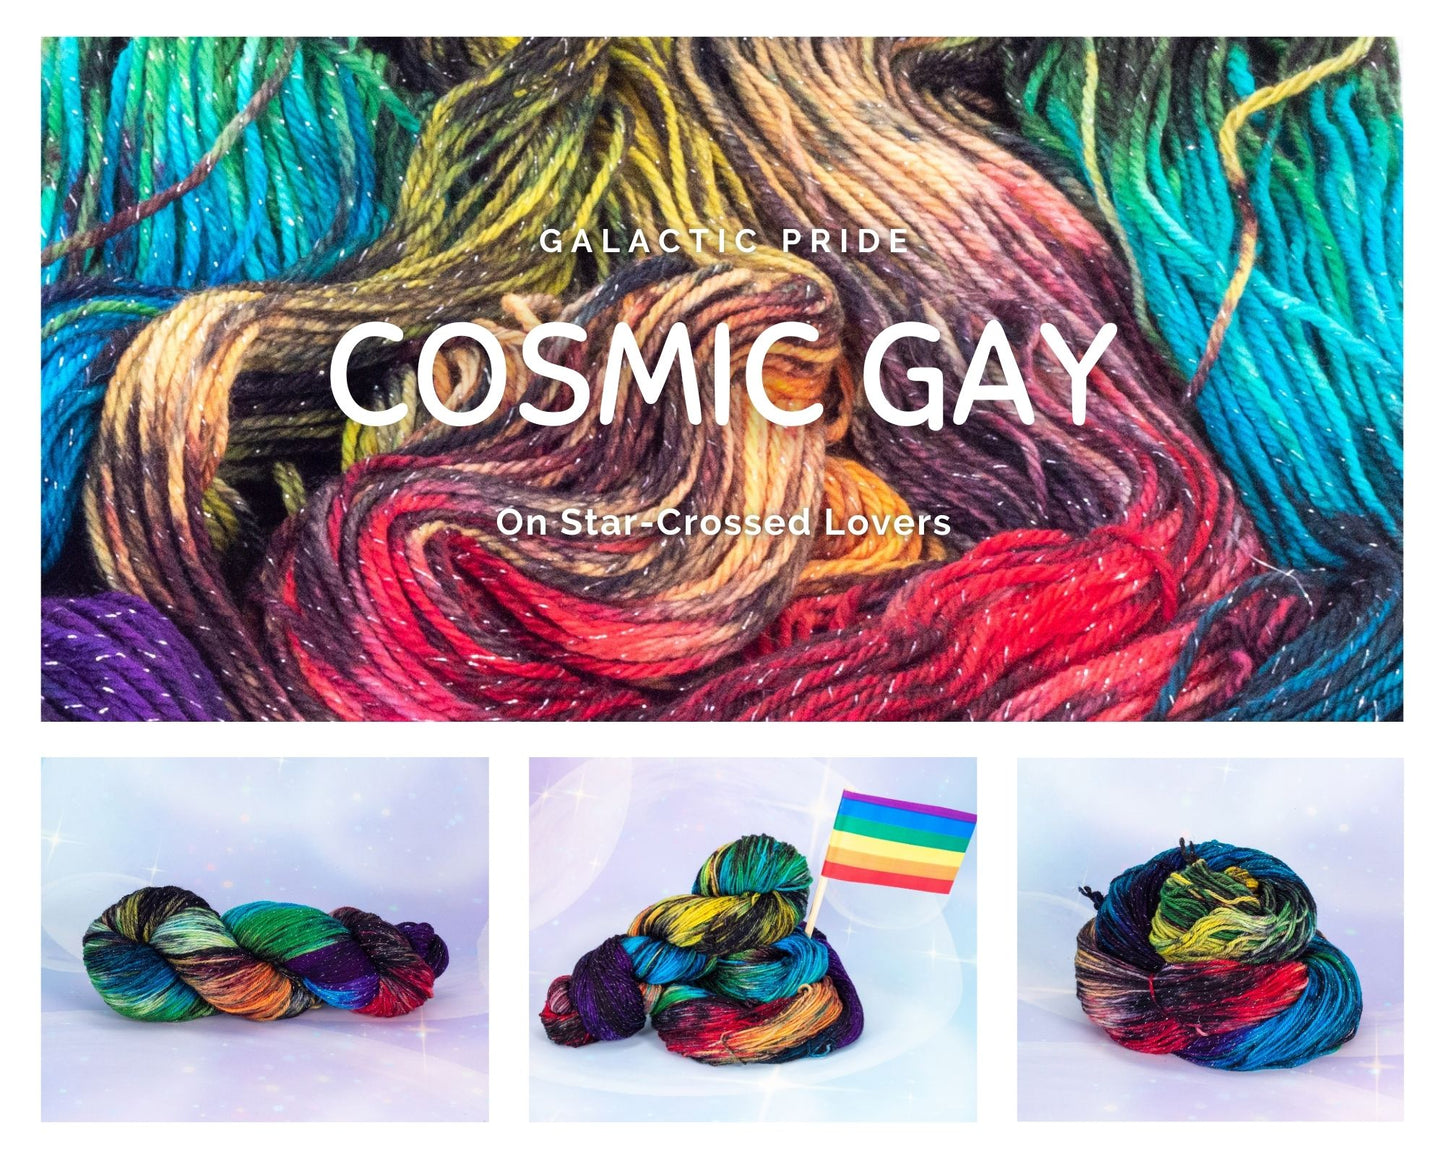 Cosmic Gay